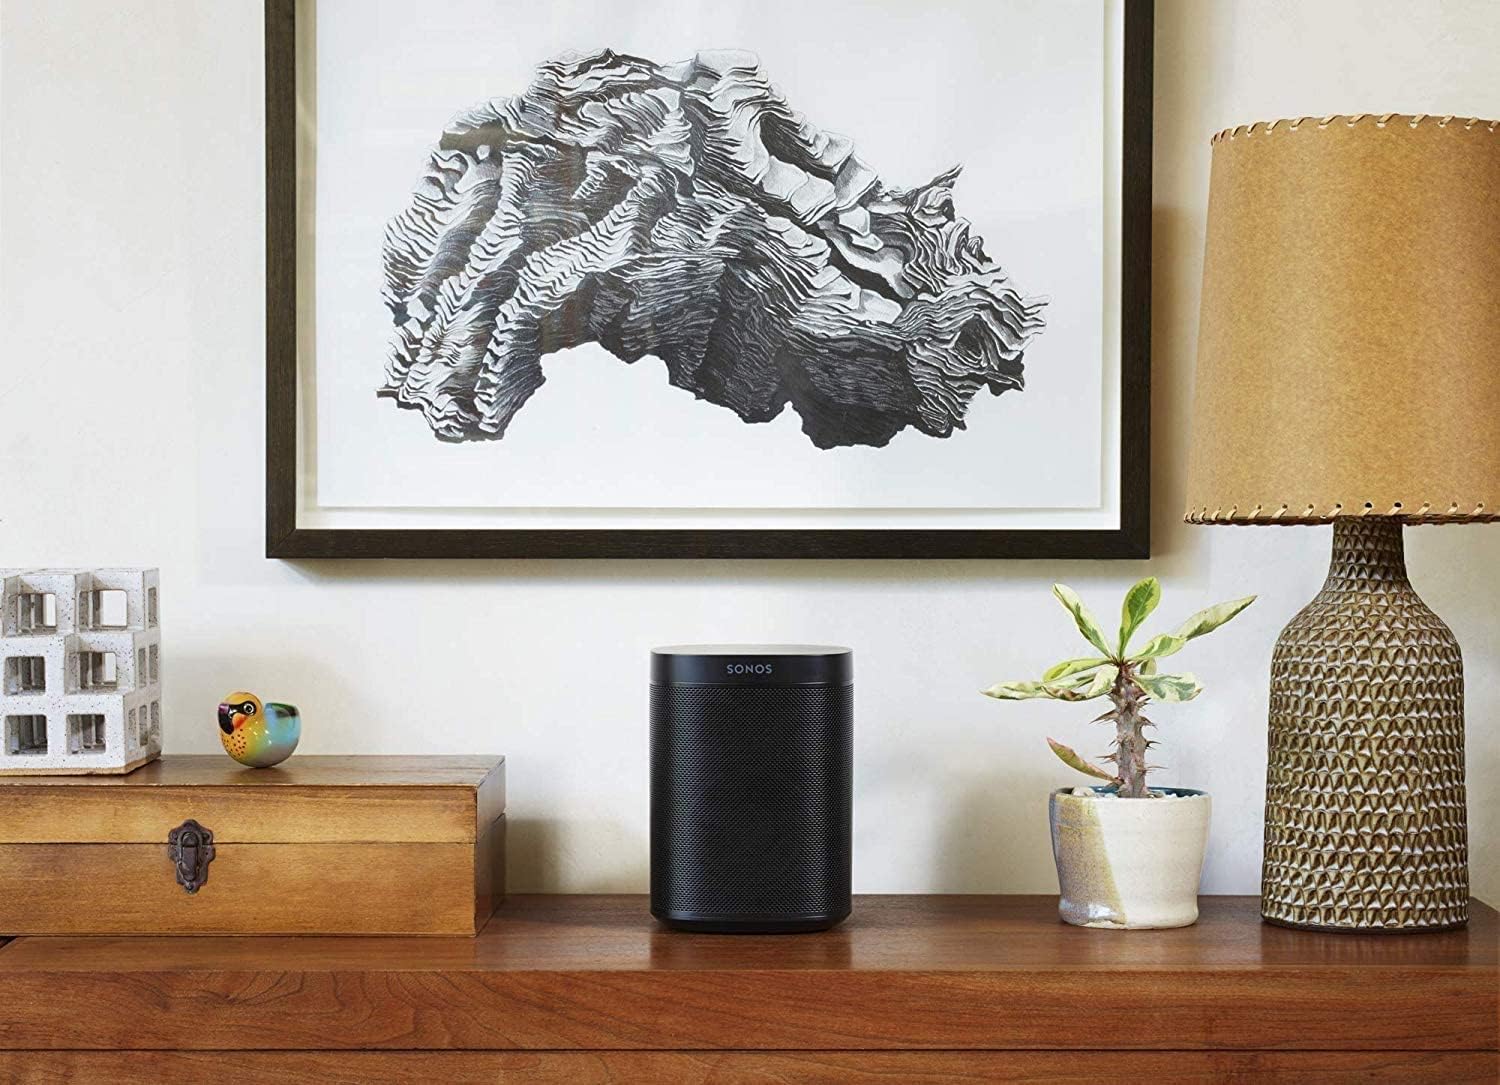 Sonos One (Gen 2) - Voice Controlled Smart Speaker with Amazon Alexa Built-In - White (Renewed)